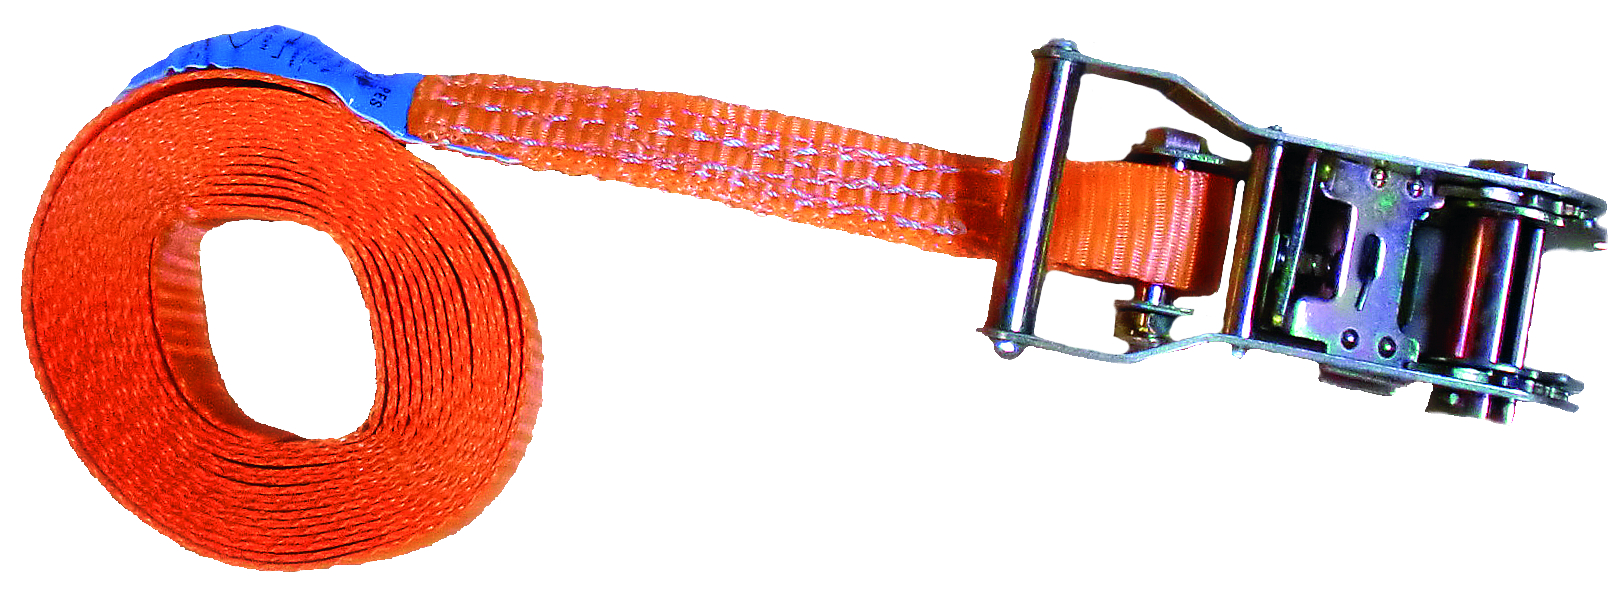 Spanband 500/1.000 kg, lengte 4 m, uit één stuk met ratel, schuurvast en slijtvast